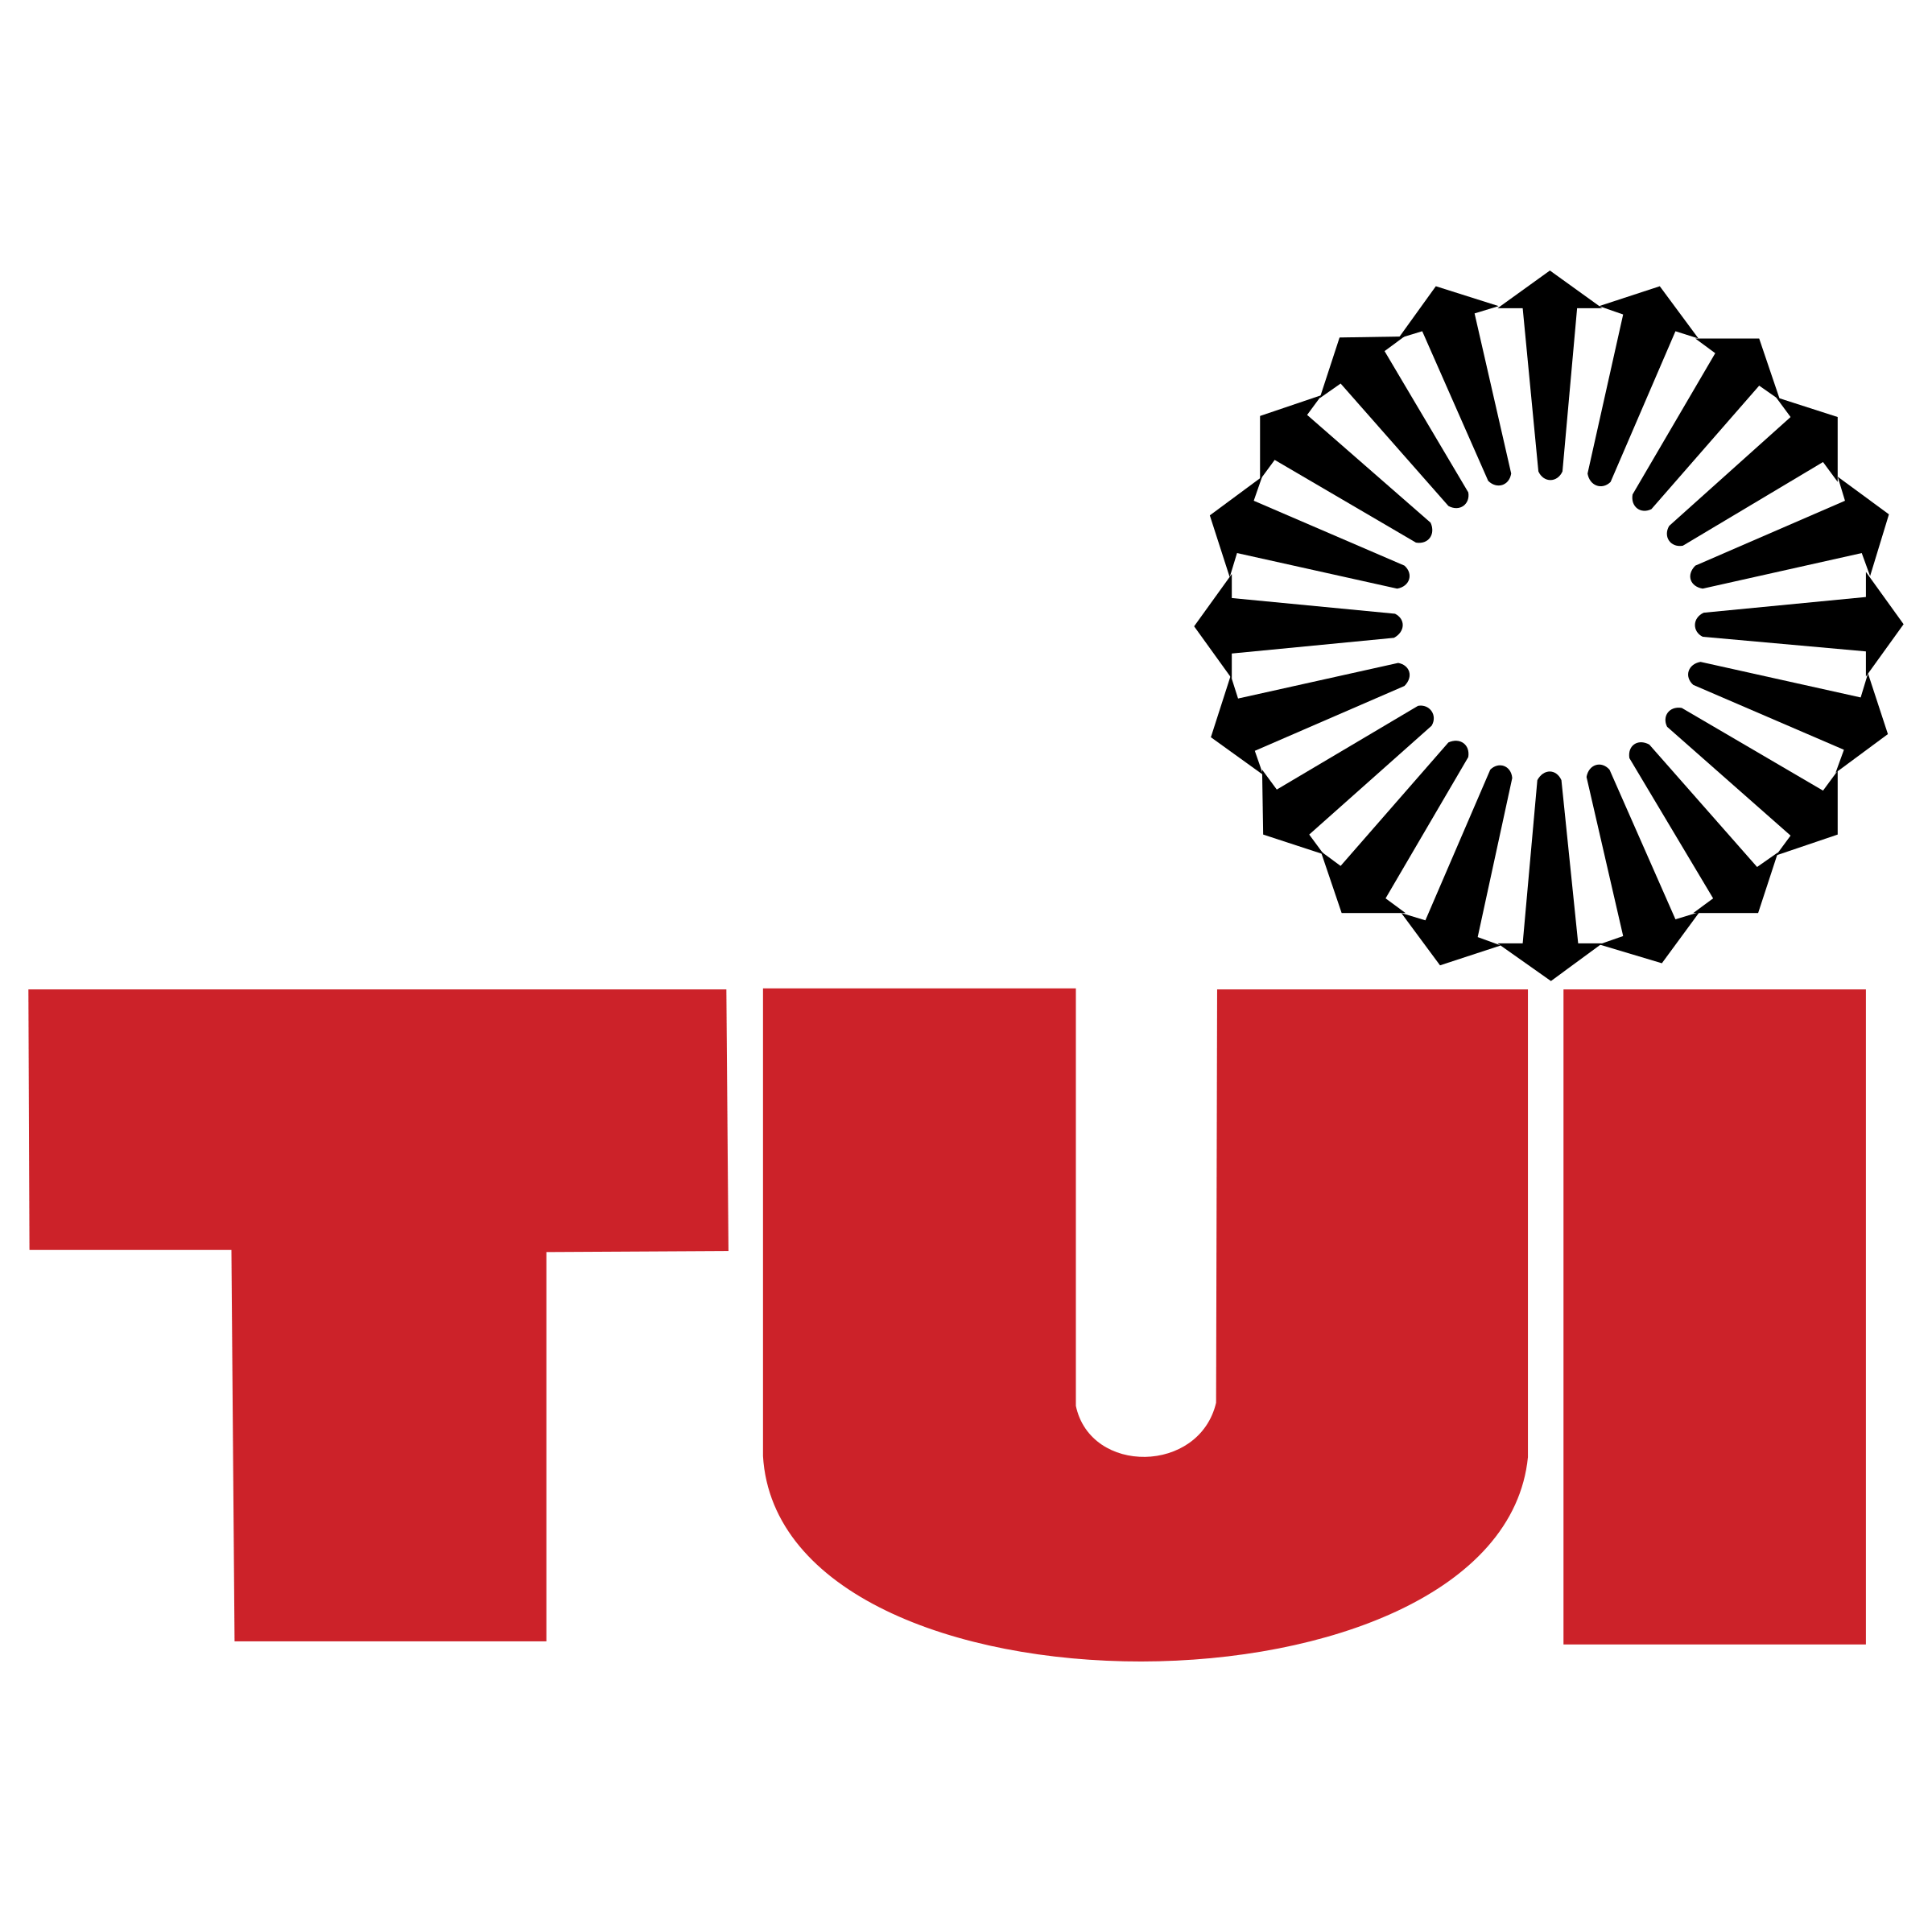 Tui Logo - TUI Logo PNG Transparent & SVG Vector - Freebie Supply